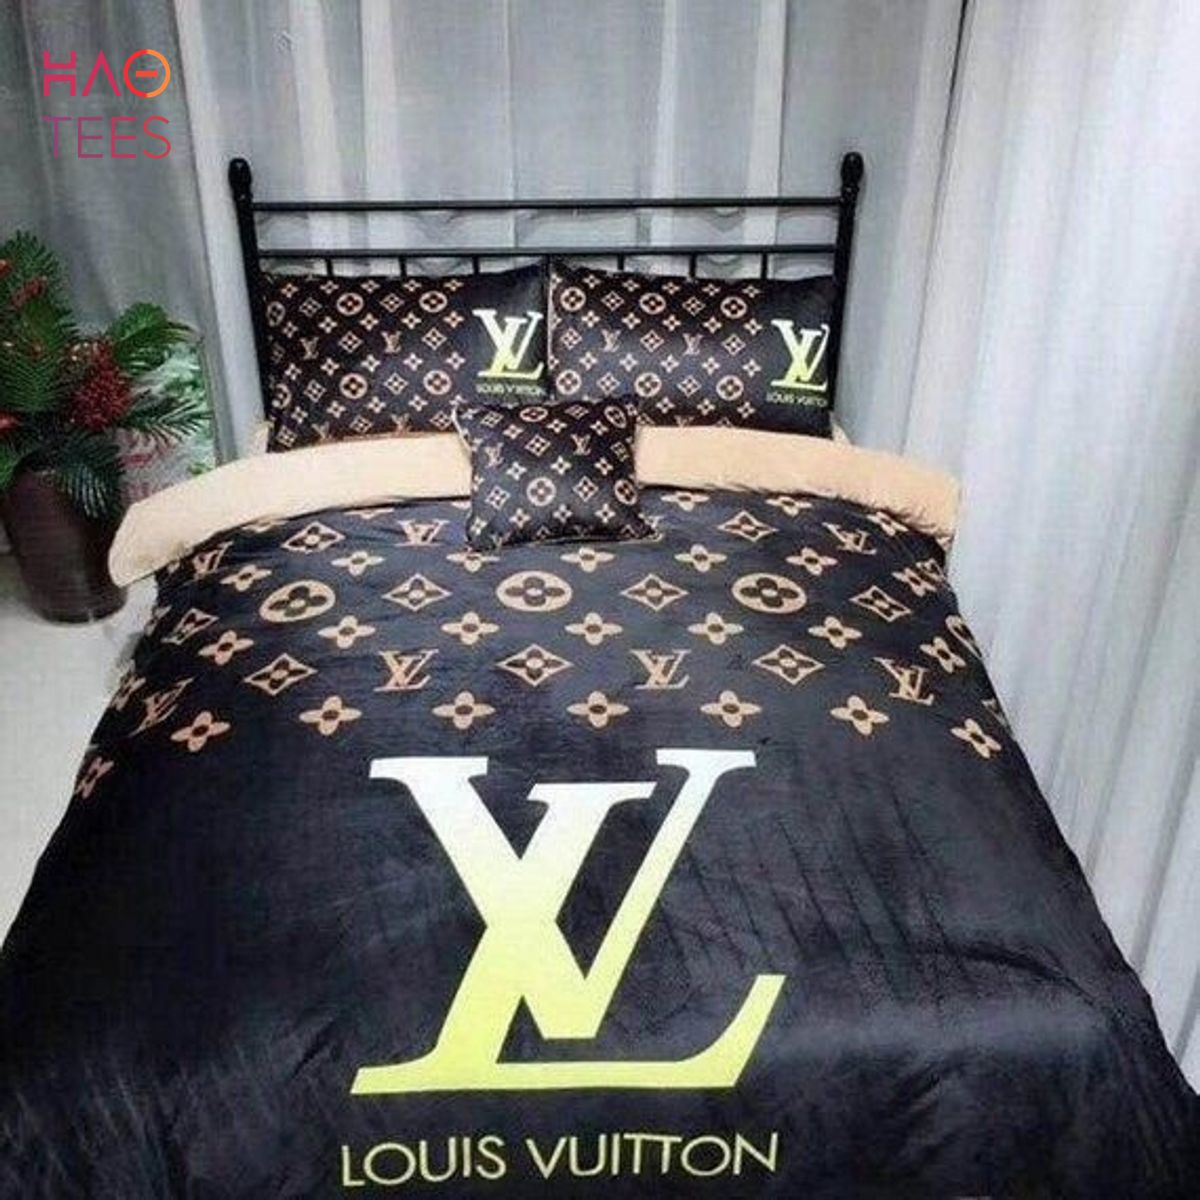 Available] French Luxury Louis Vuitton Black White Bedding Set